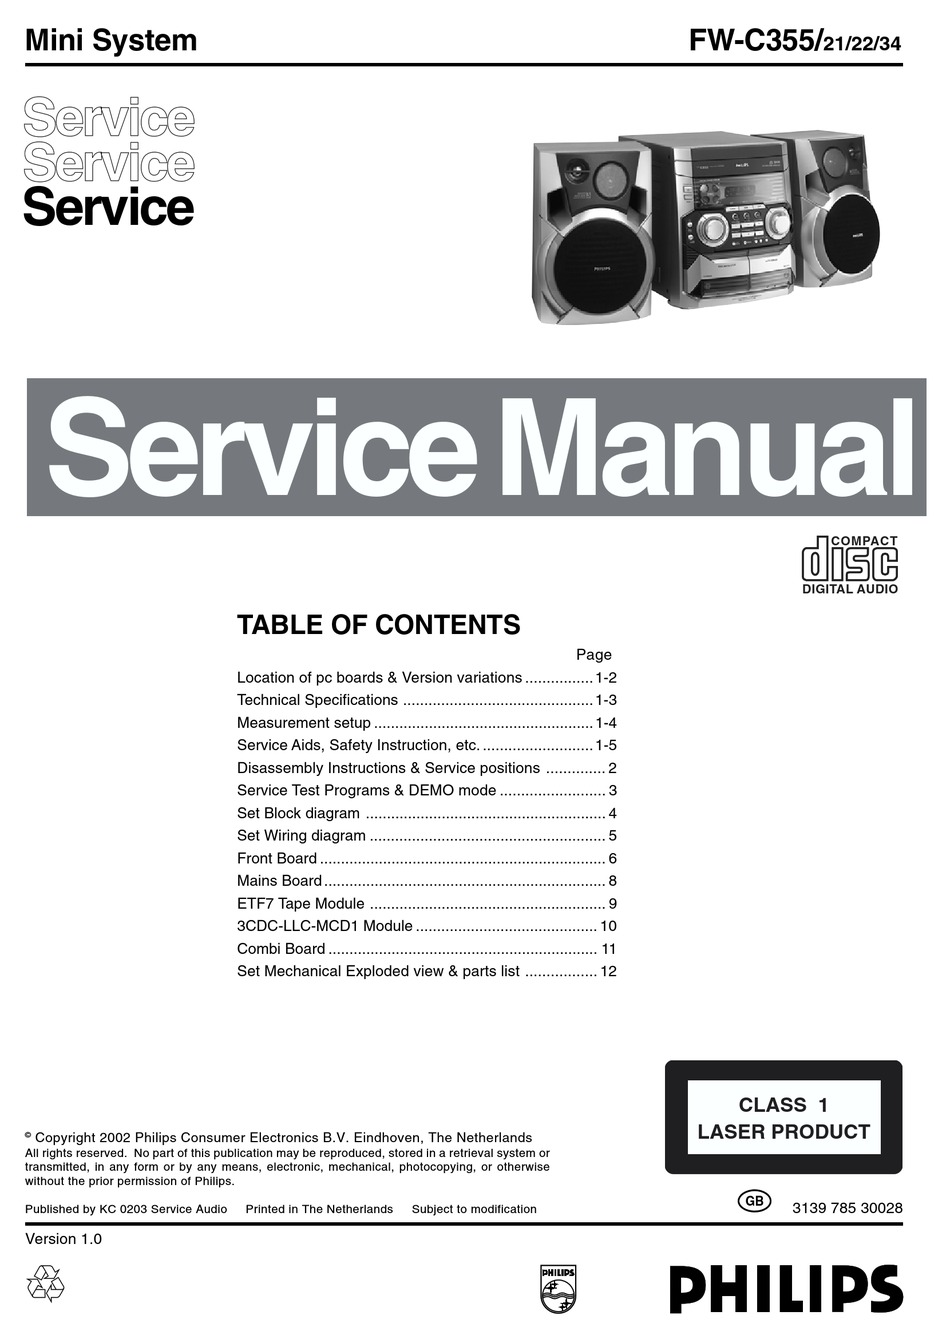 Service manual philips. Philips FW-c355. Philips FW-c355/34. Philips FW 40/34 service manual. Philips FW 355.